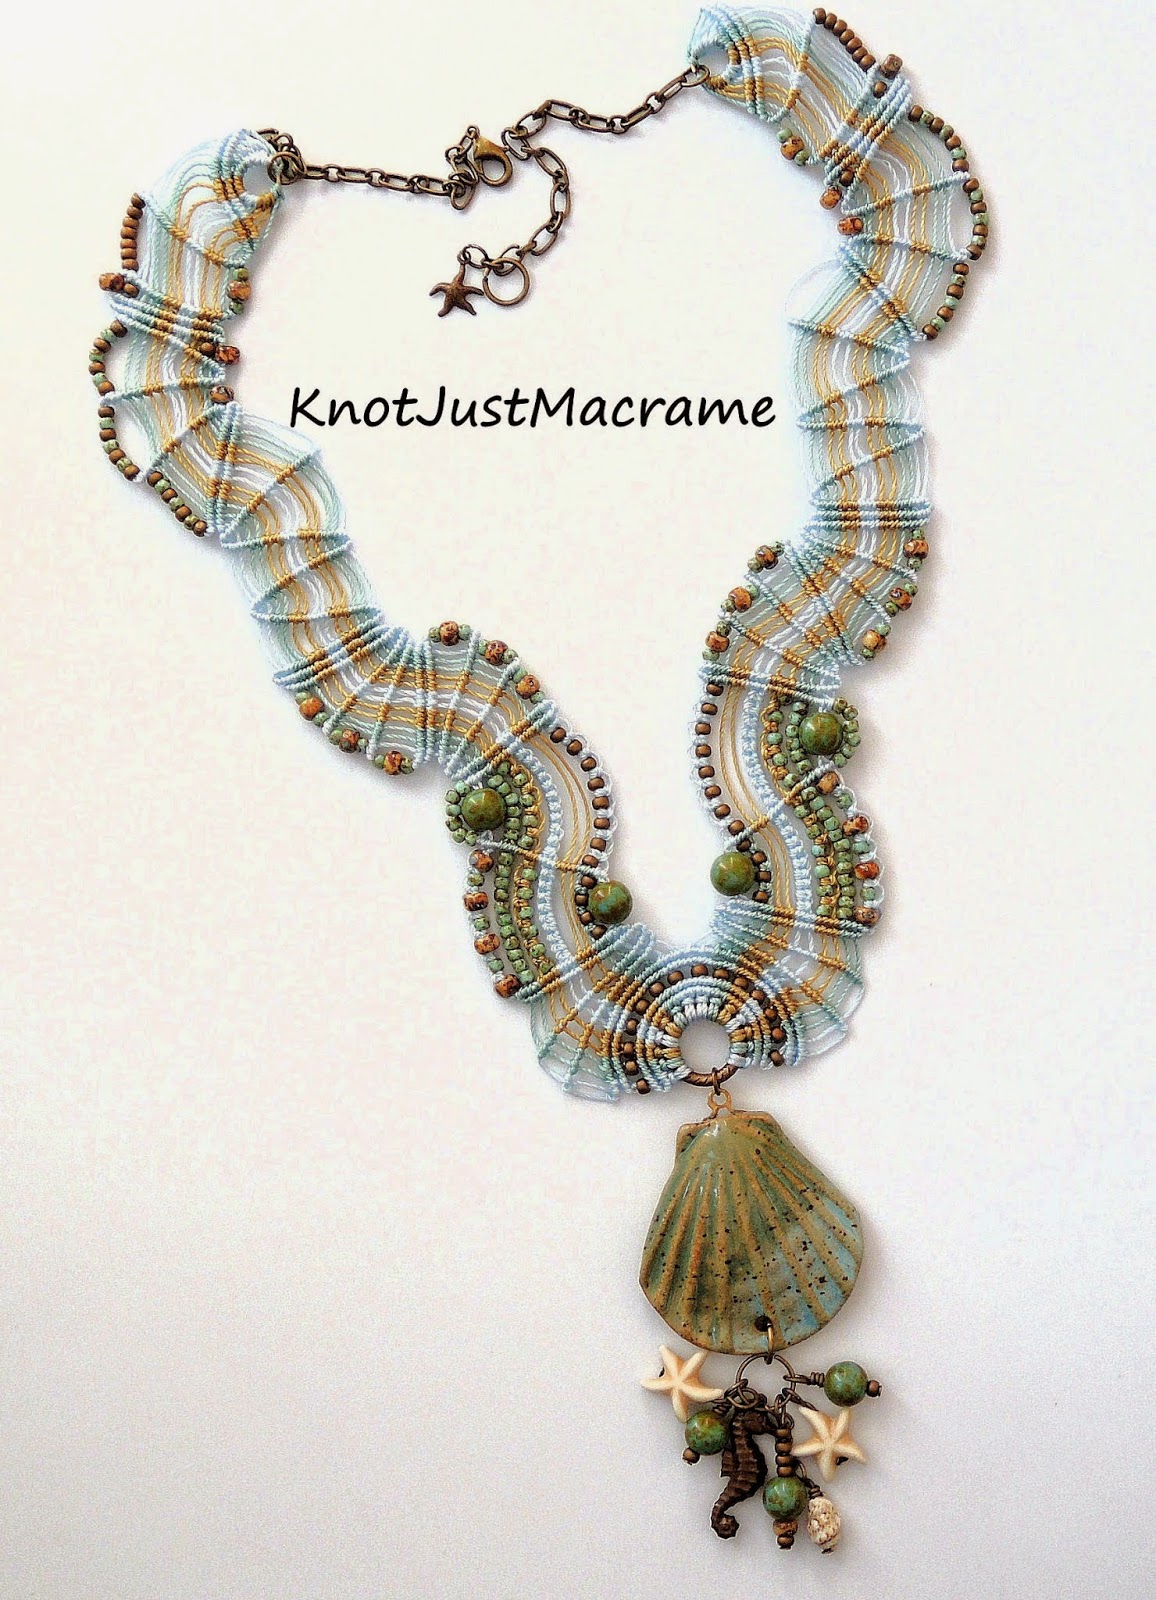 Micro macrame necklace by Sherri Stokey with ceramic shell pendant by Firefly Design Studio